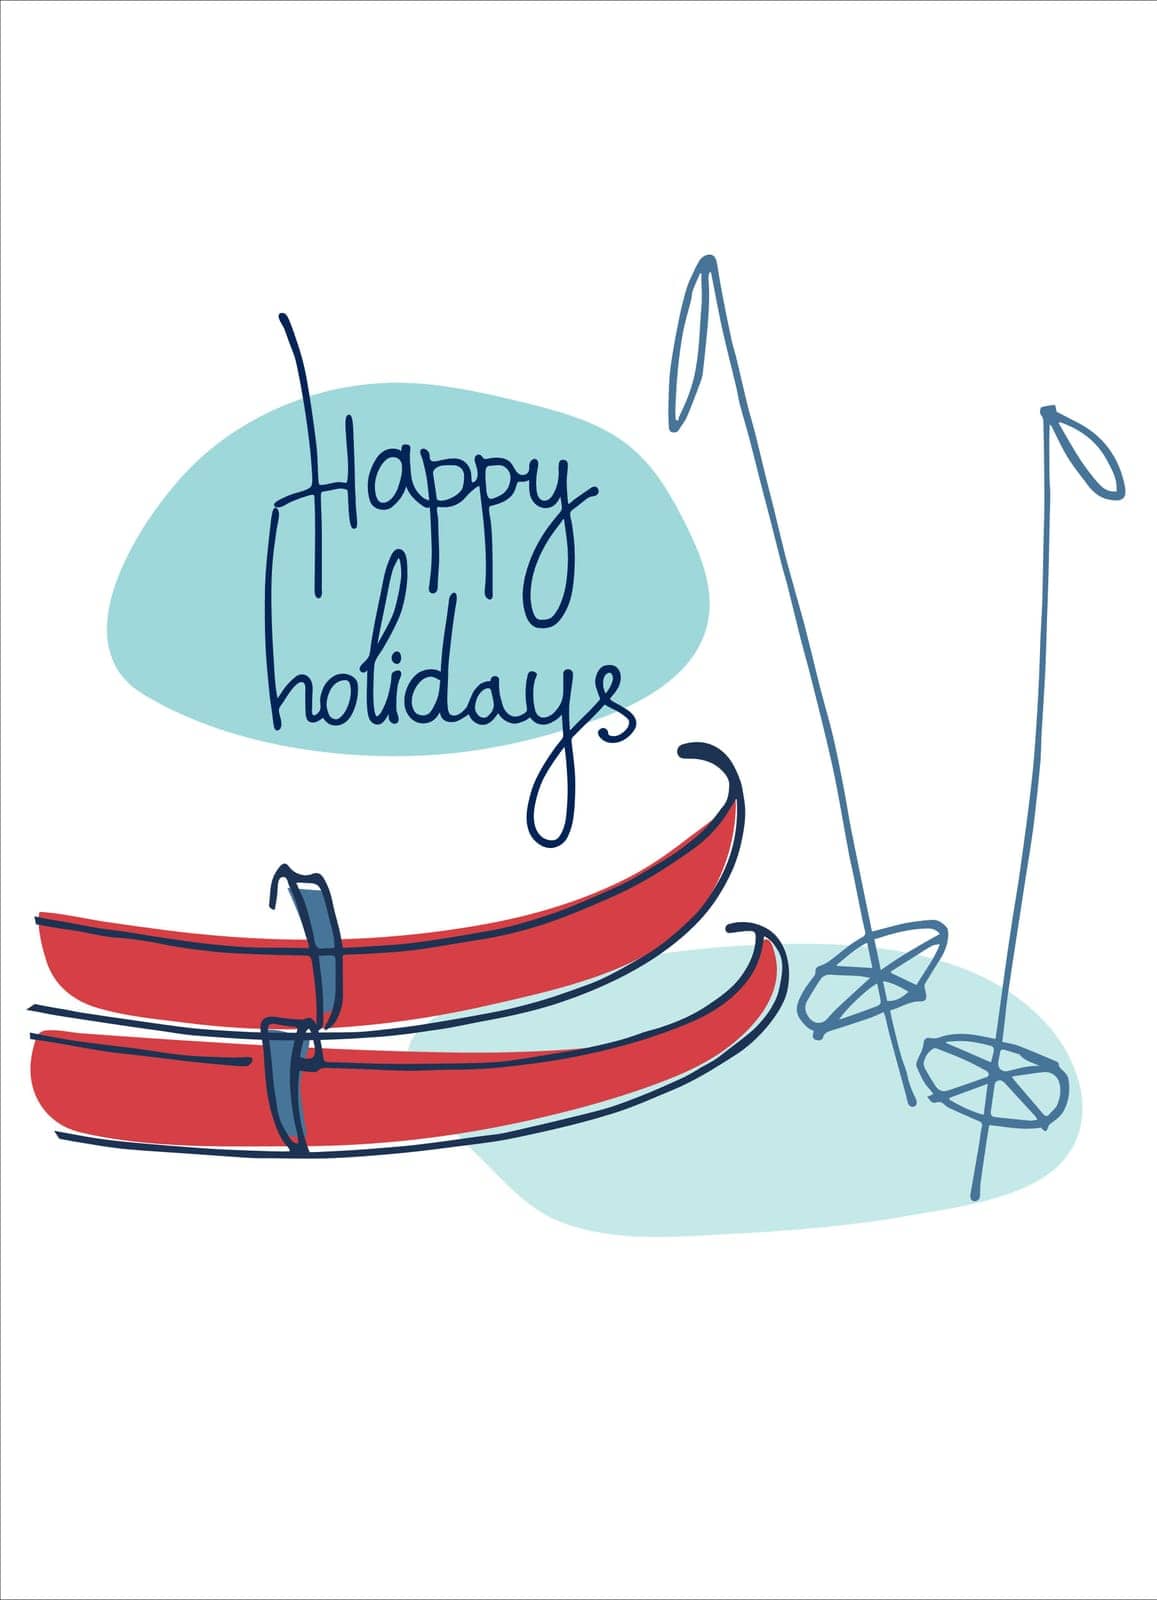 Happy holidays greeting lettering with vintage skis. Winter holidays concept. Ski resort banner, ad. Card template by SvetaPyatigorskaya